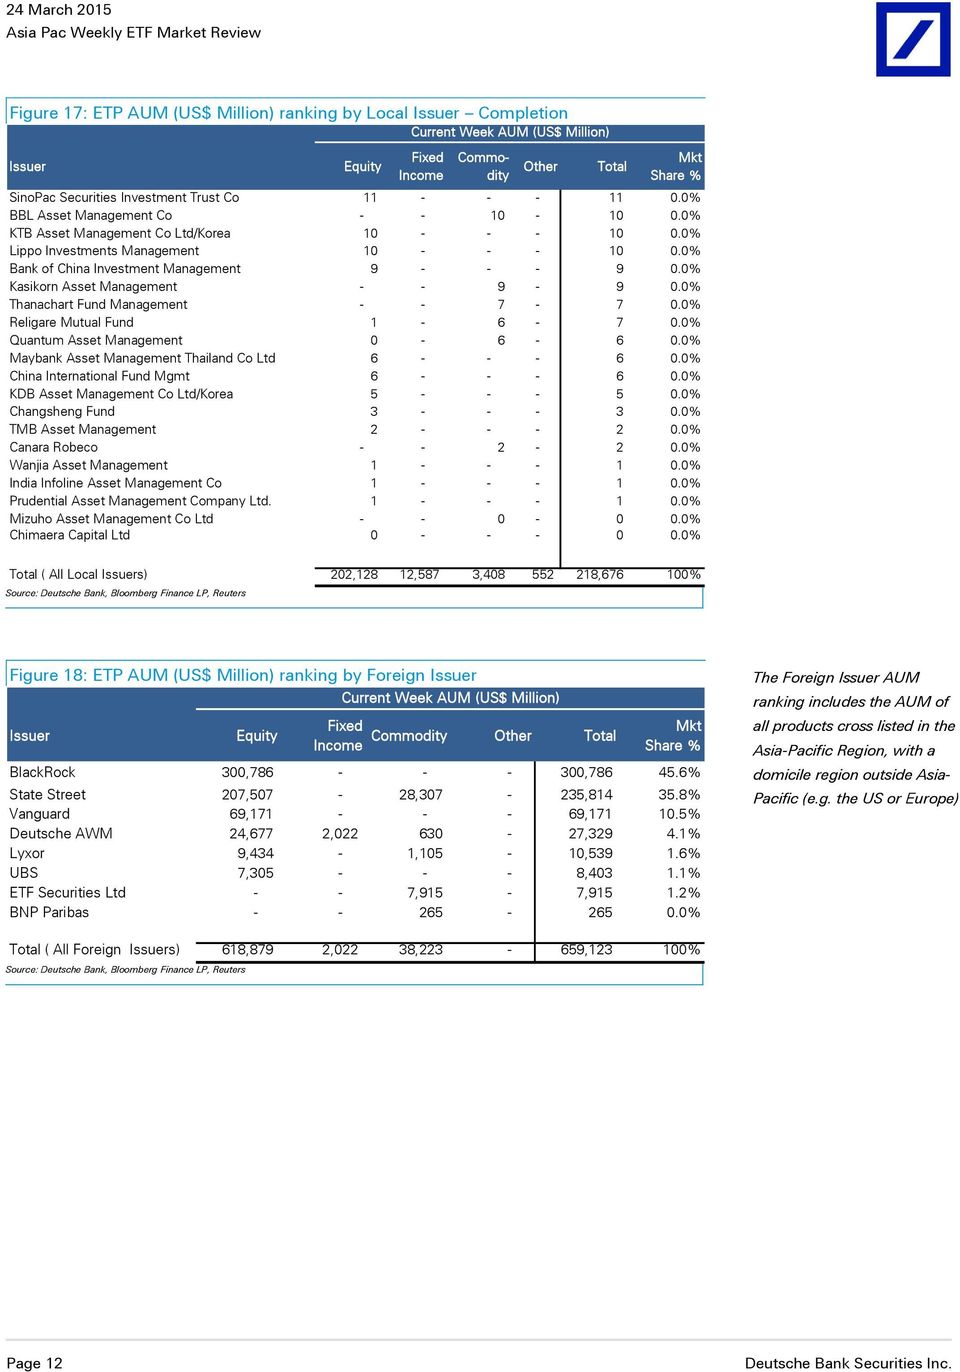 0% Kasikorn Asset Management - - 9-9 0.0% Thanachart Fund Management - - 7-7 0.0% Religare Mutual Fund 1-6 - 7 0.0% Quantum Asset Management 0-6 - 6 0.